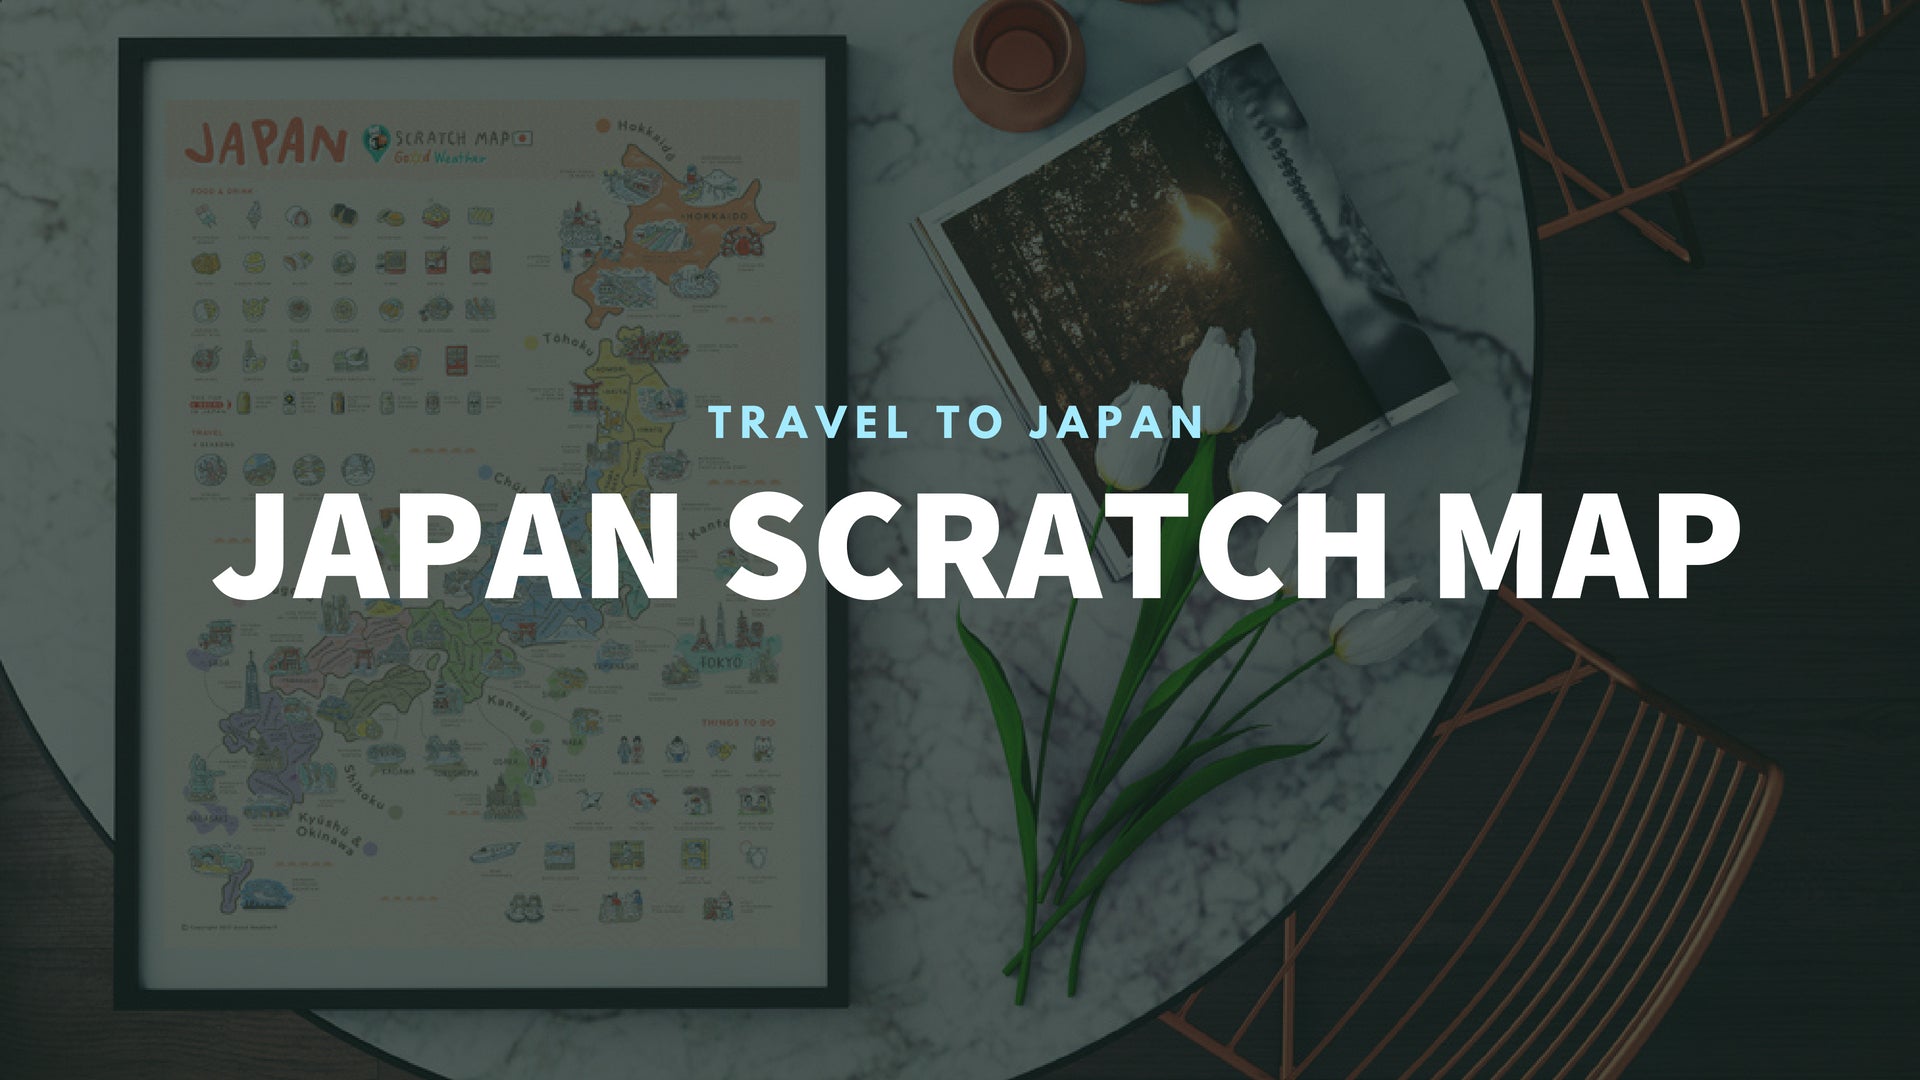 Japan scratch map - iMartCity 刮刮樂 travel to japan travel map